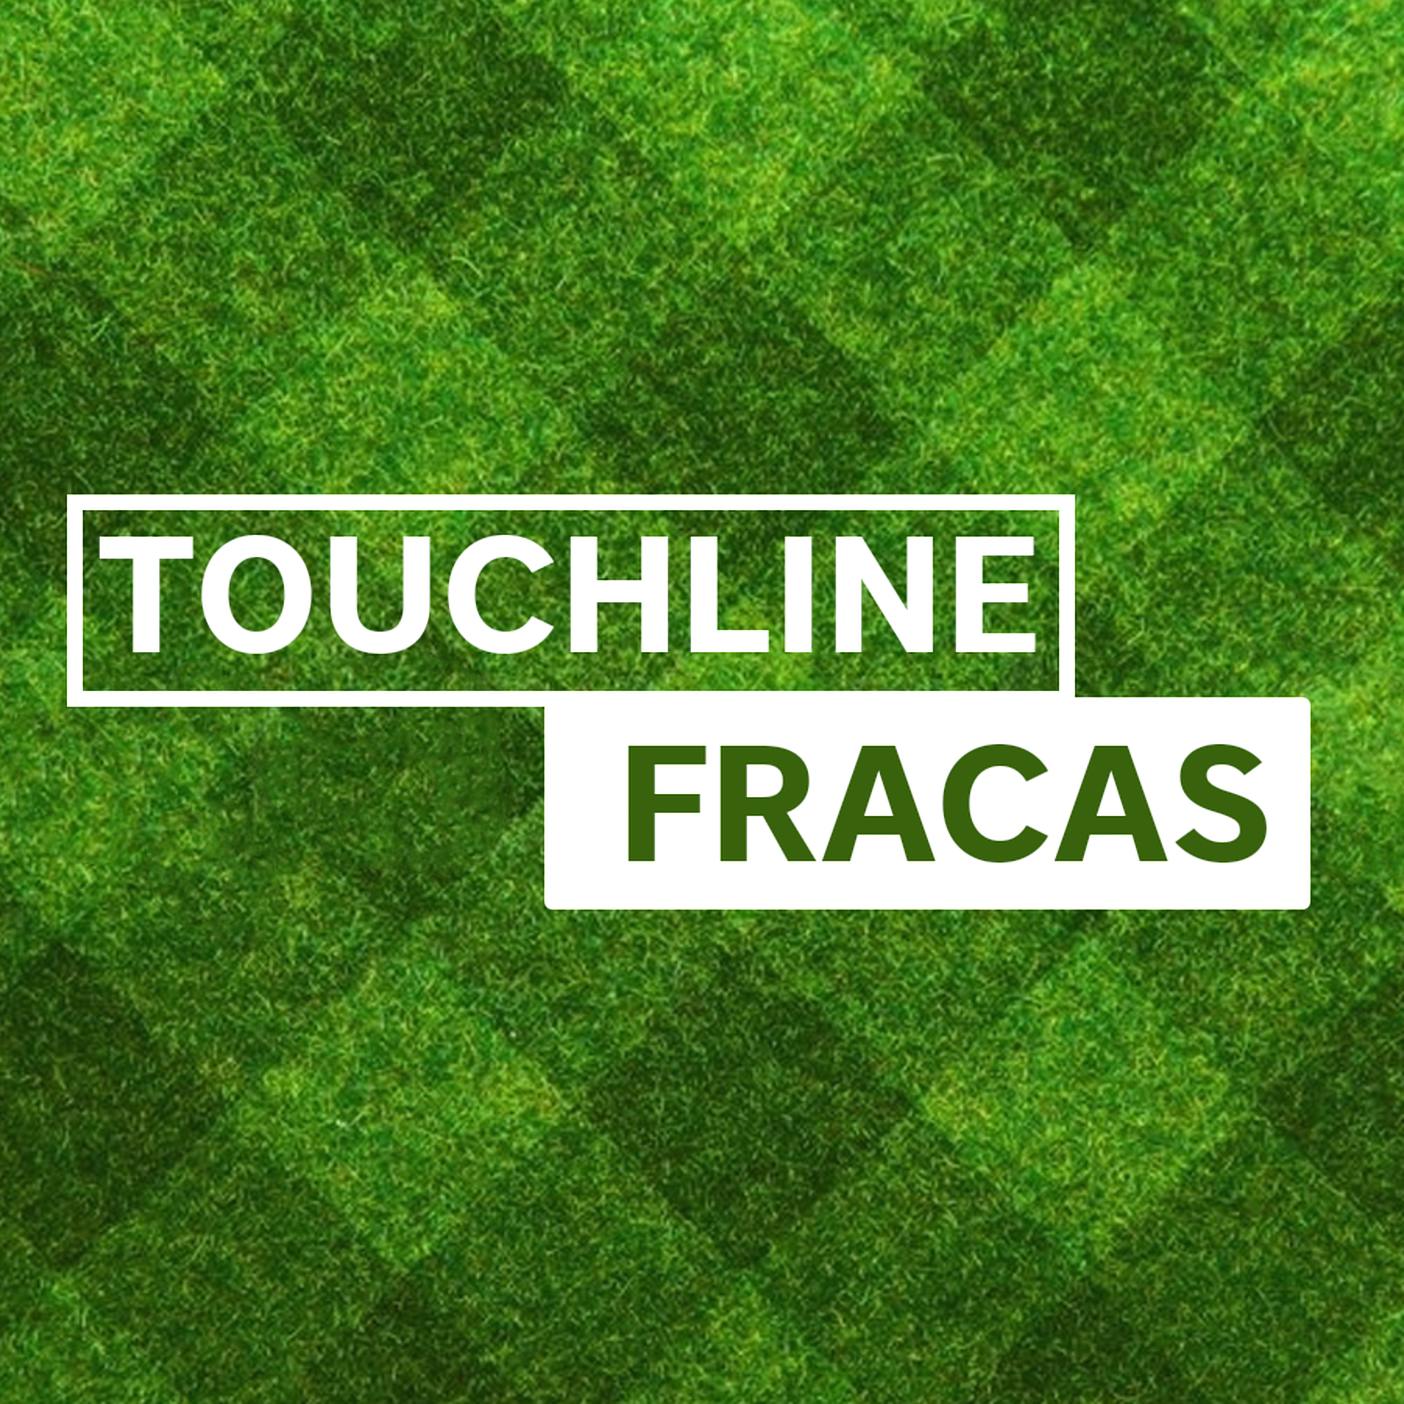 Touchline Fracas - Electoral Roll